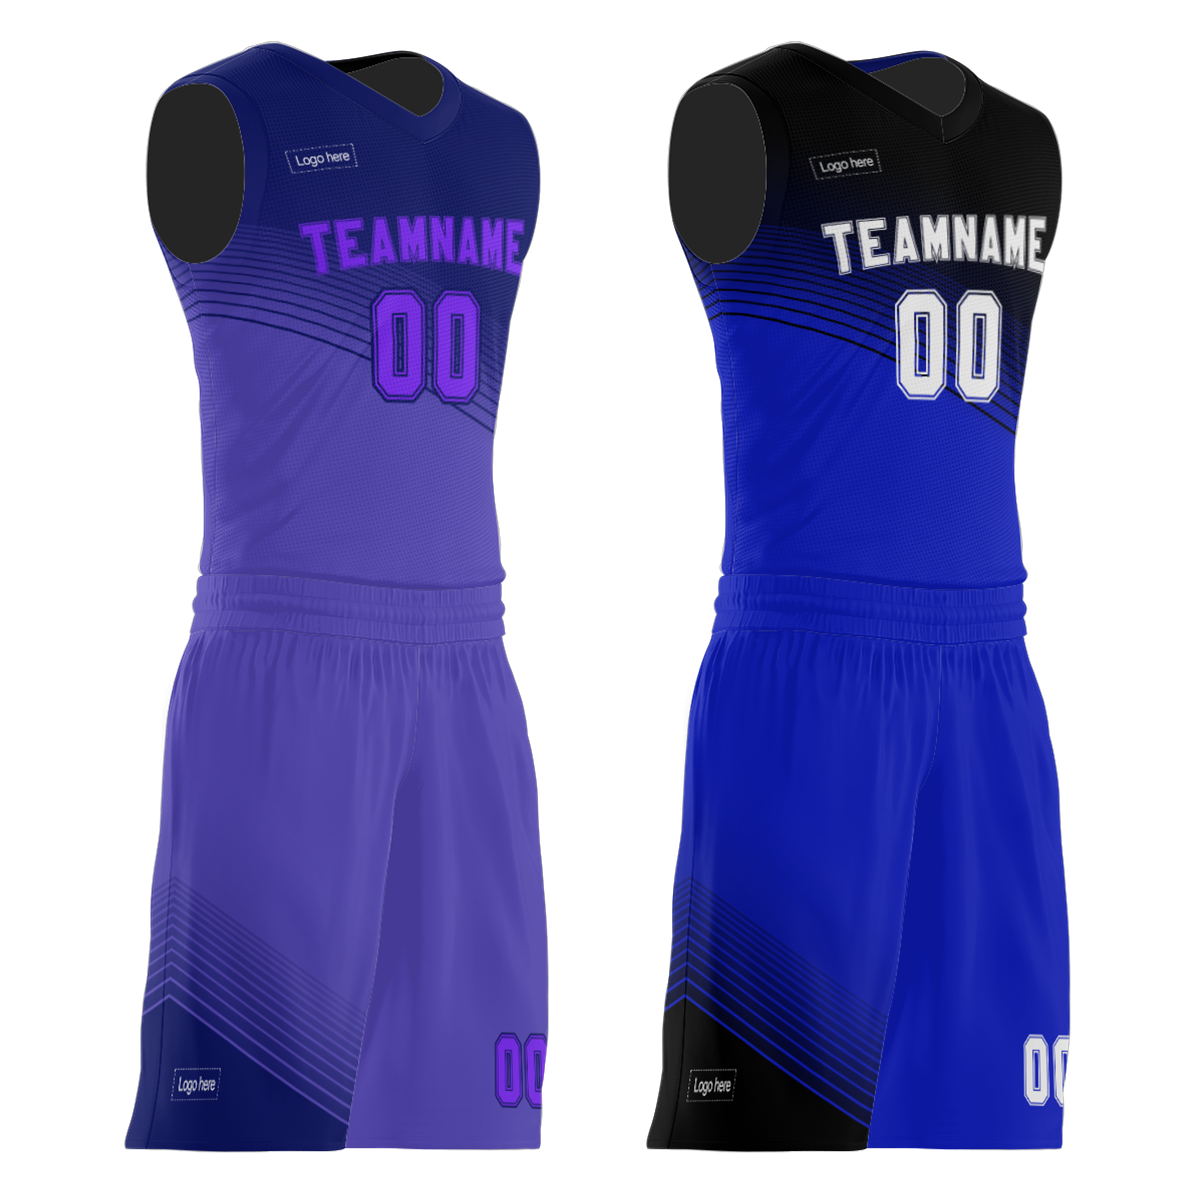 The Latest Custom Sublimated Basketball Jerseys Printed Reversible Basketball Uniforms